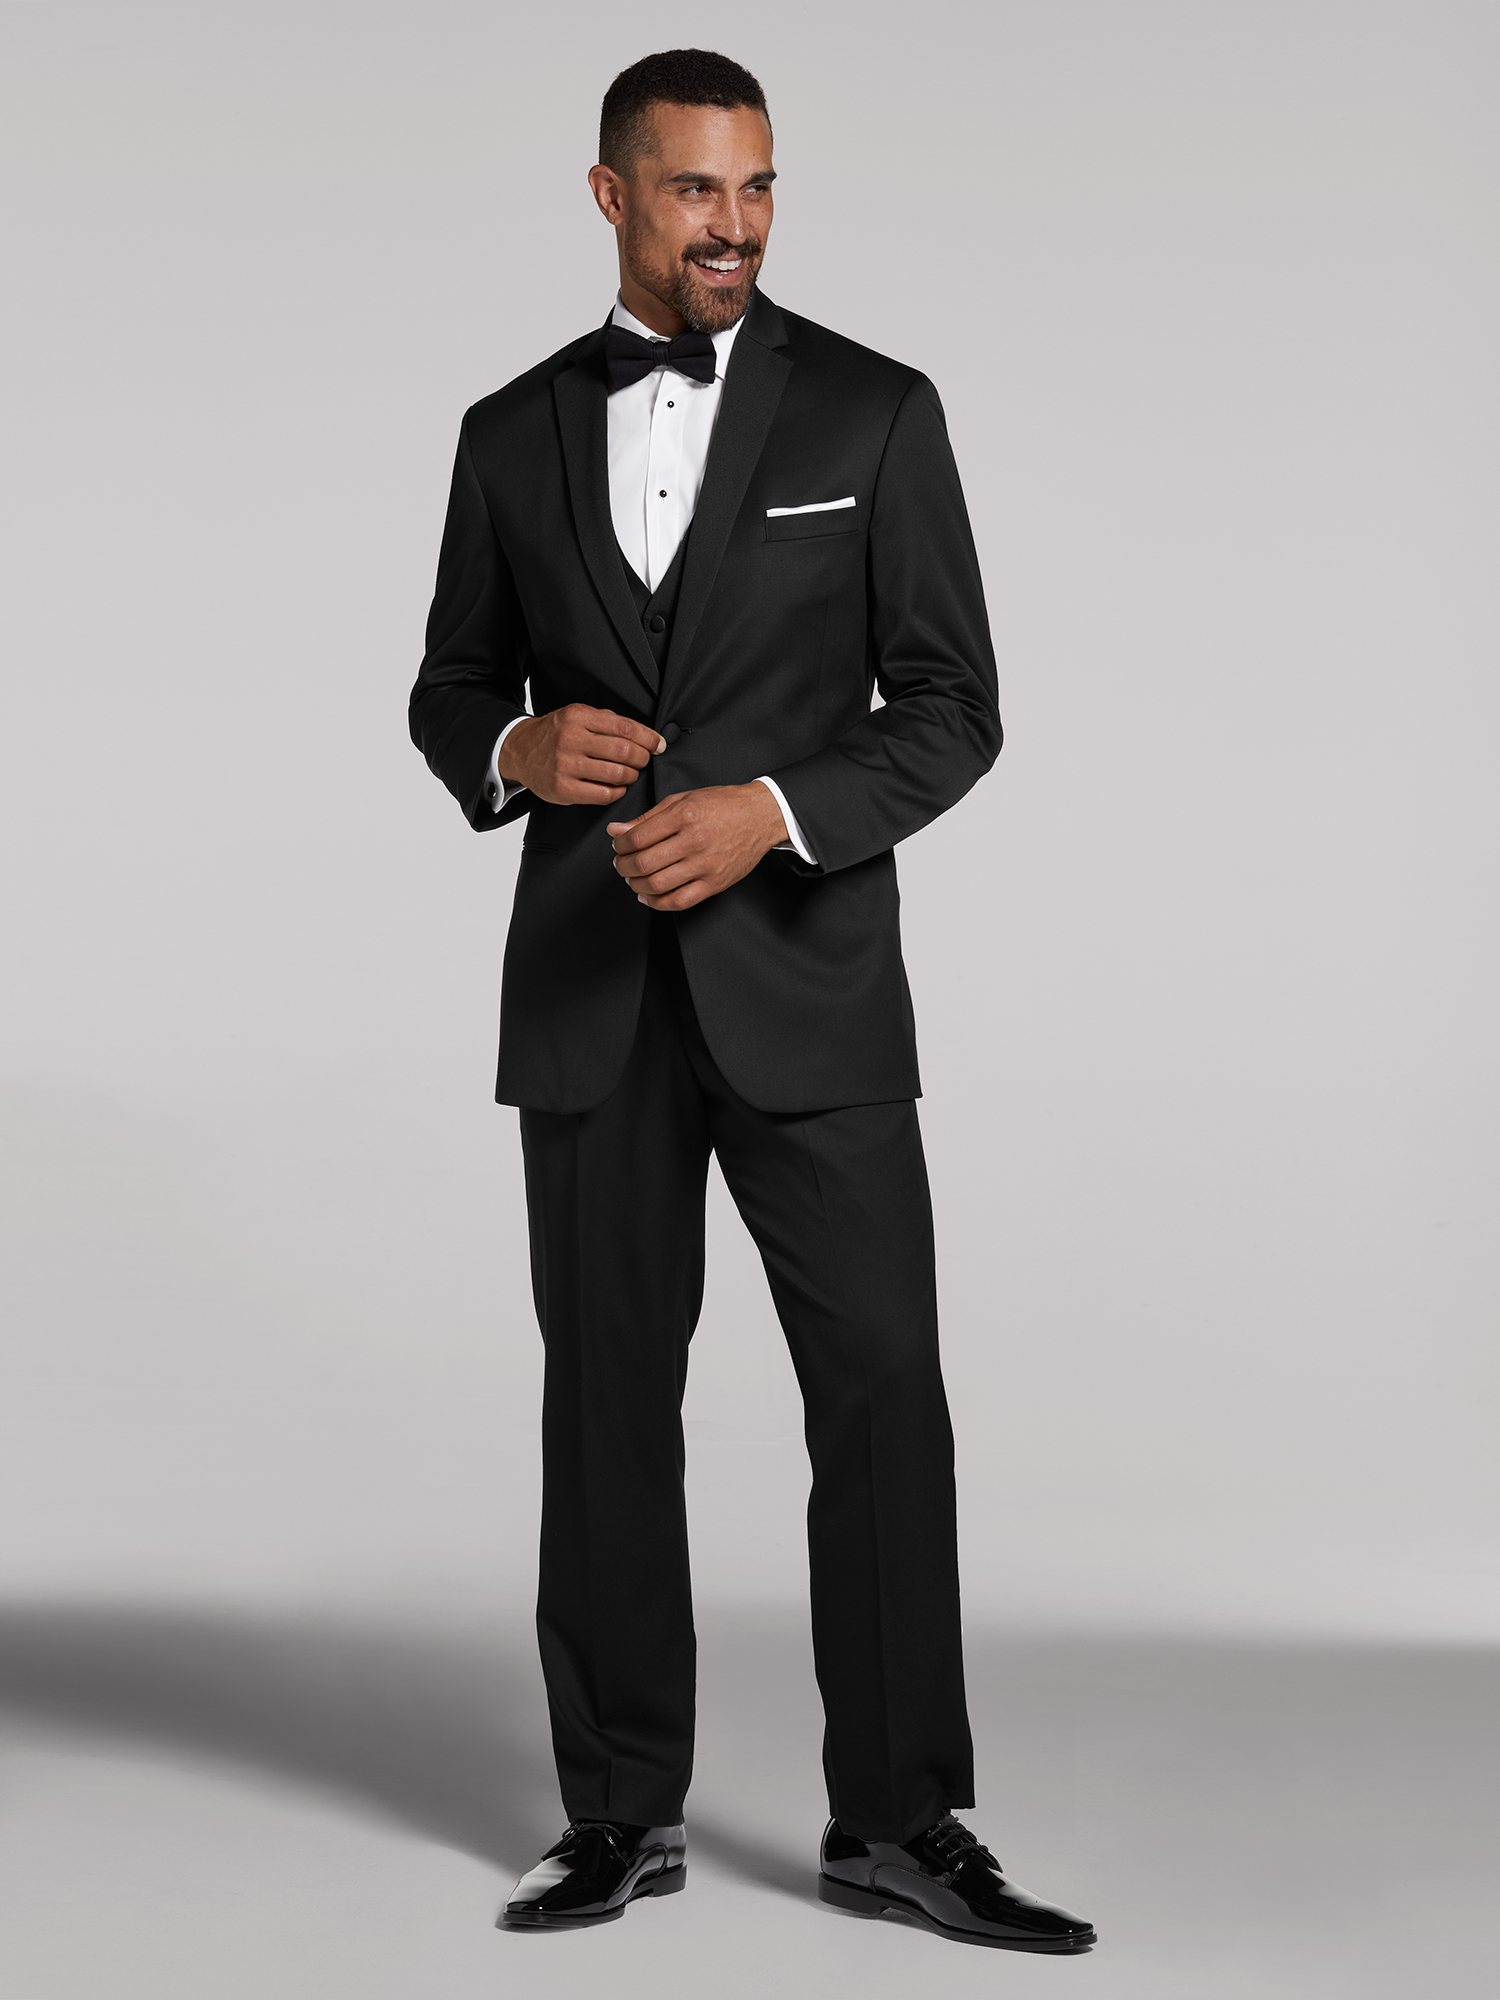 Charcoal Performance Suit by Calvin Klein | Suit Rental